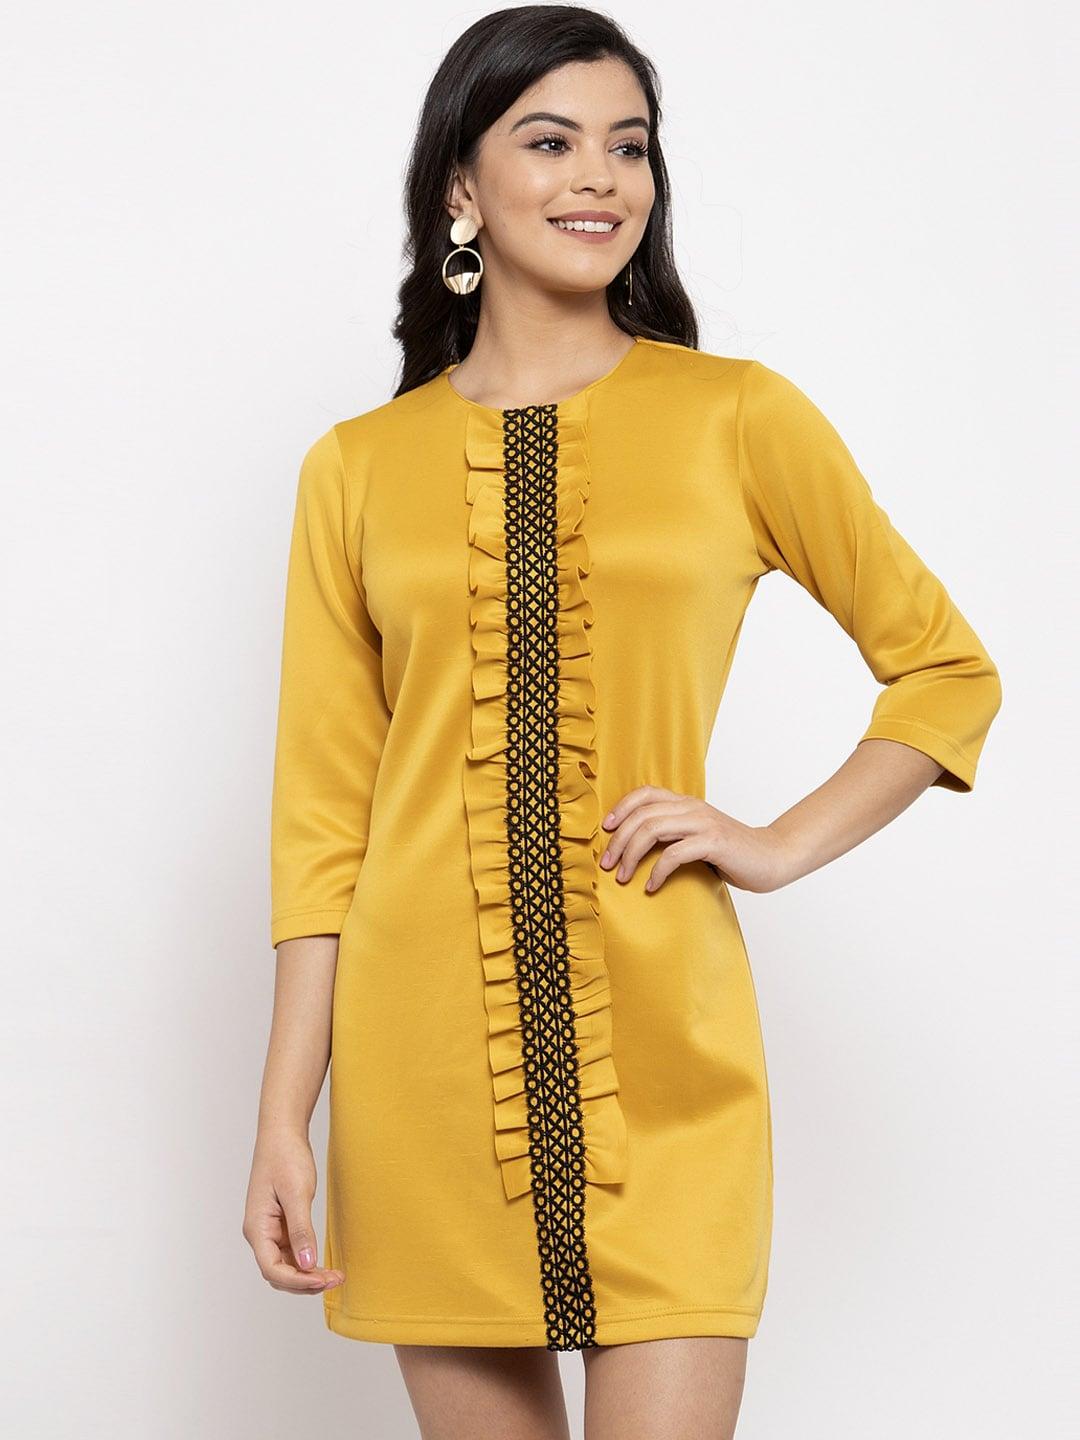 kassually-women-mustard-yellow-solid-sheath-dress